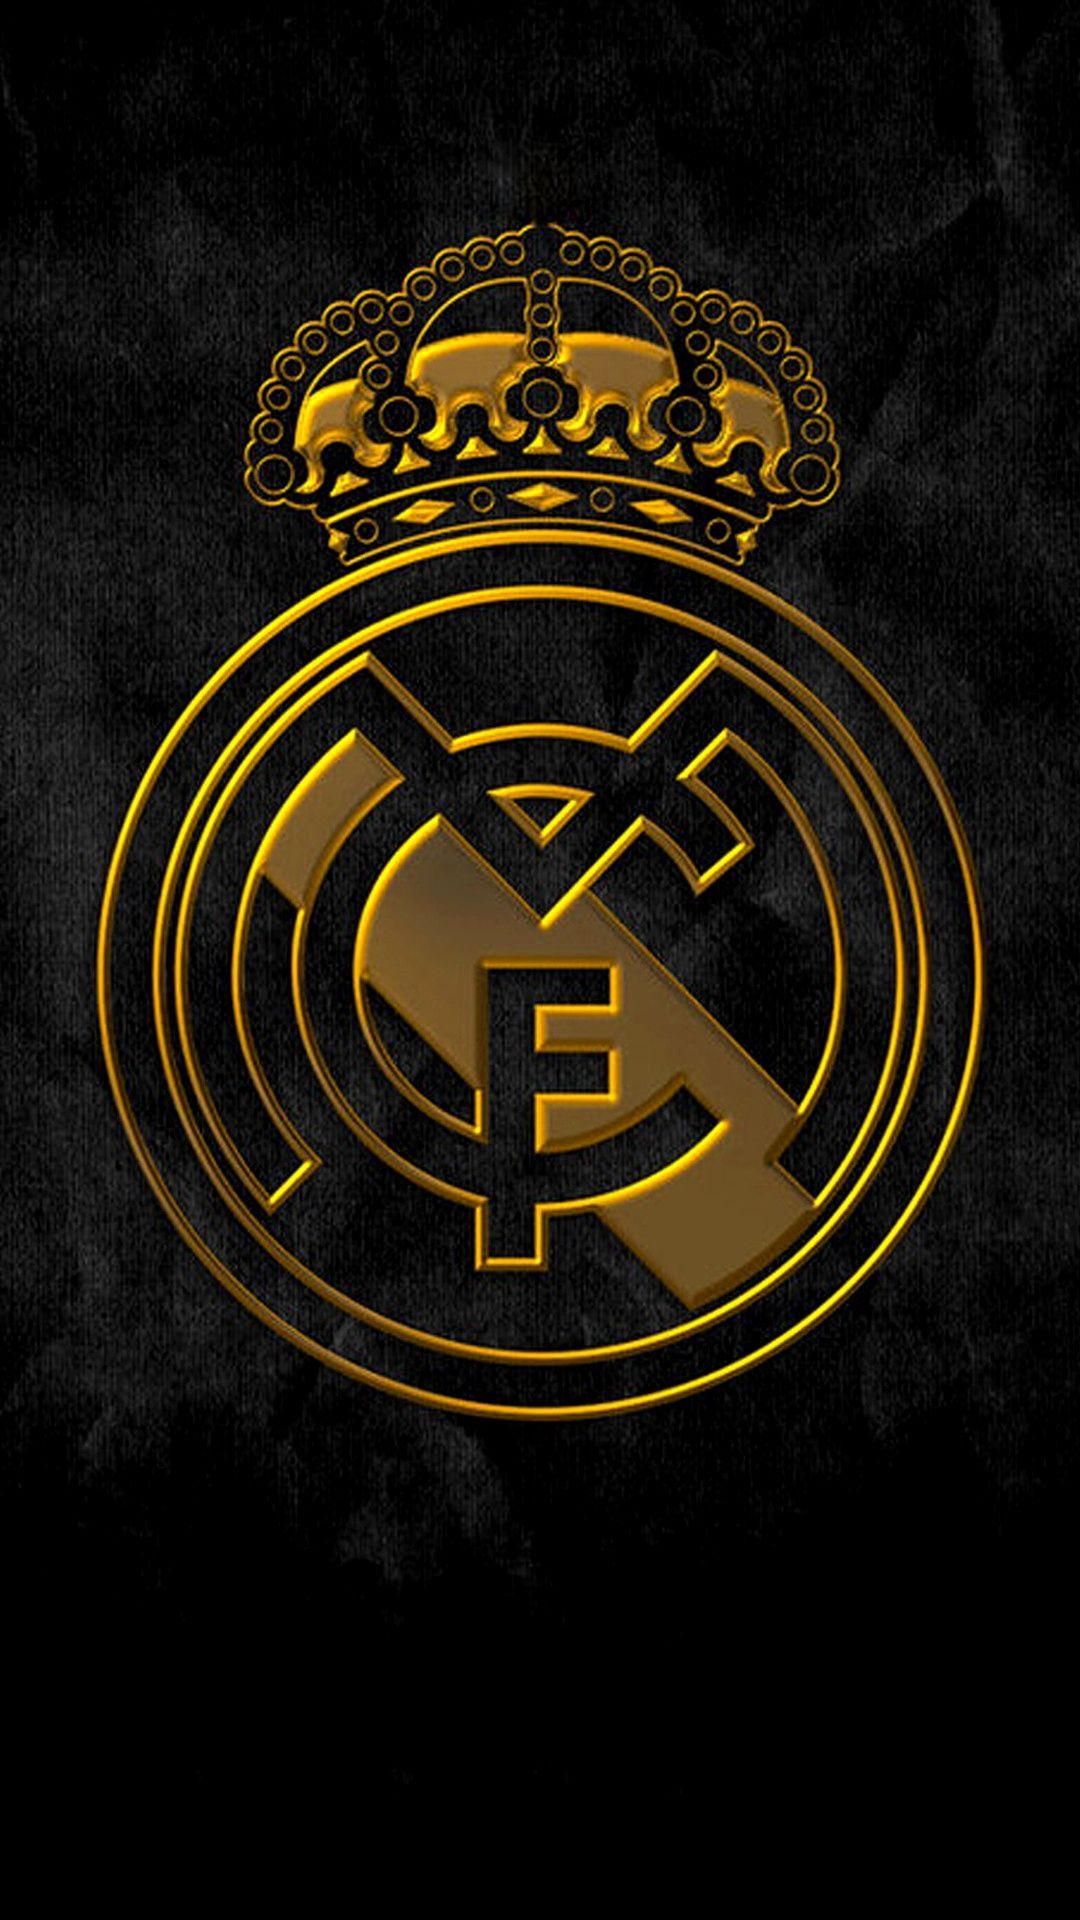 Real Madrid Hintergrundbild 1080x1920. Real Madrid Wallpaper 4K Mobile Ideas. Fondos de pantalla real madrid, Logotipo del real madrid, Real madrid